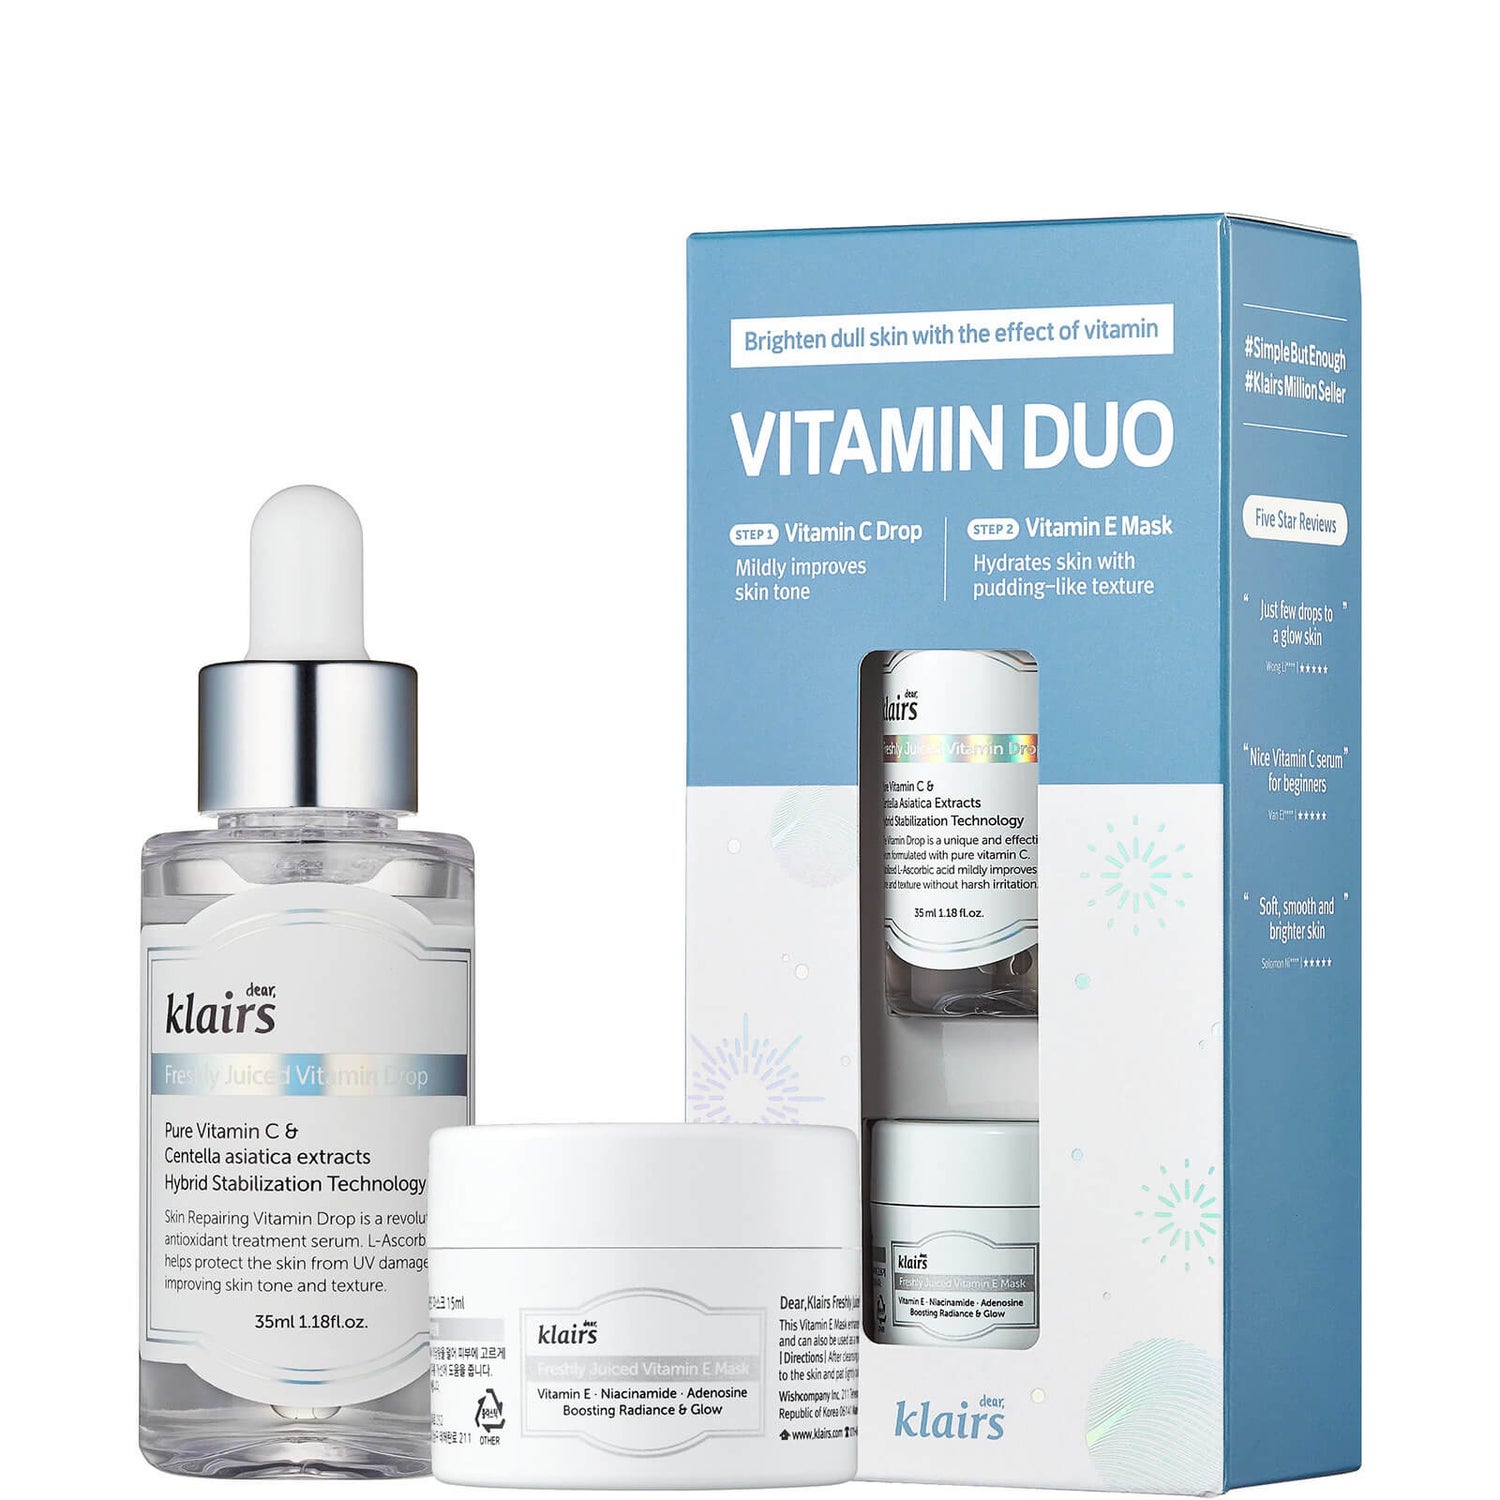 Dear, Klairs Vitamin Duo Trial Kit